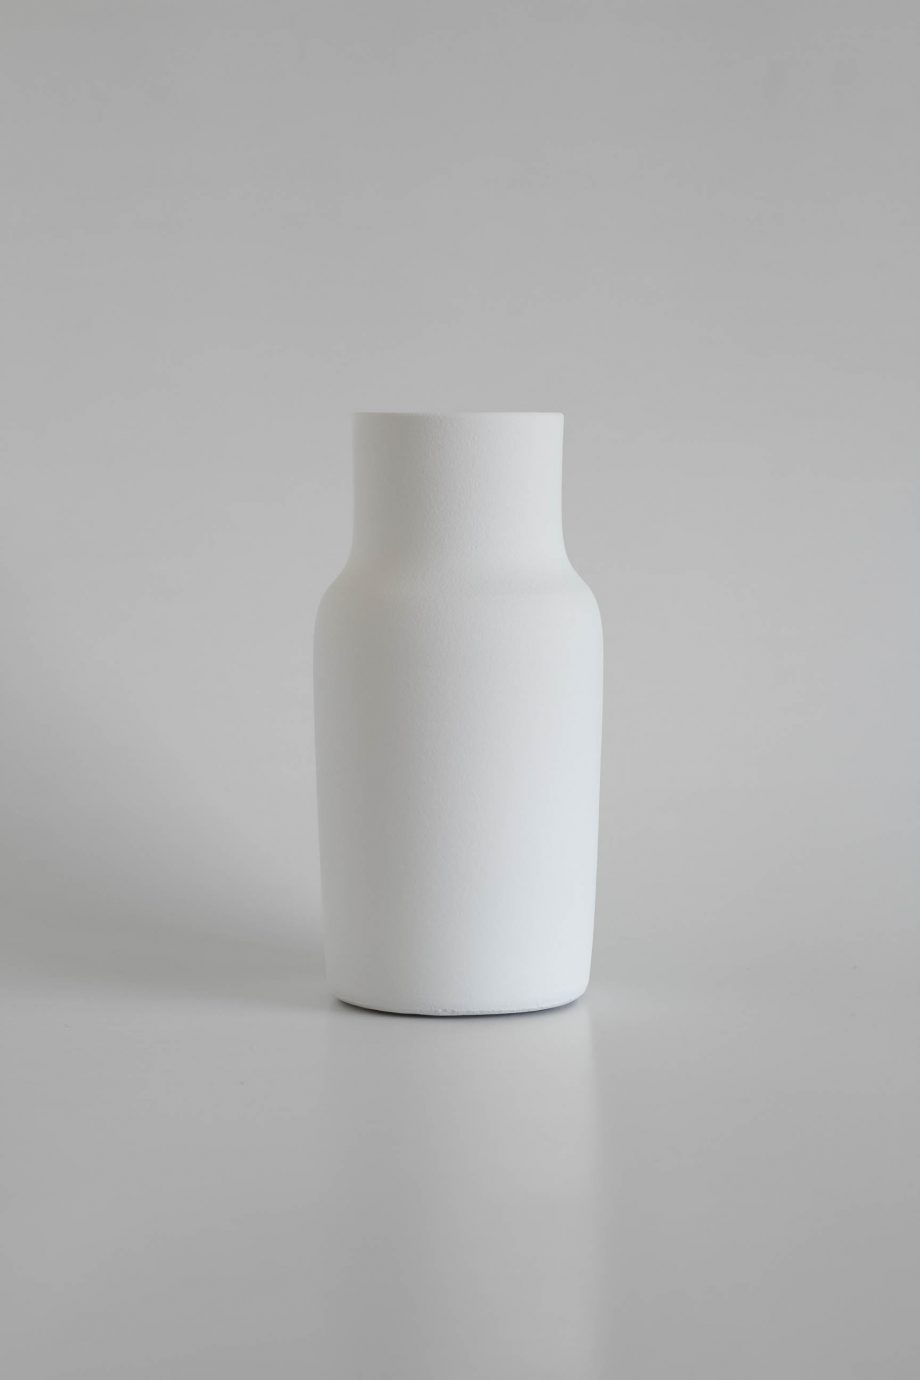 white decorative vase from the Portuguese handicraft brand o cactuu.